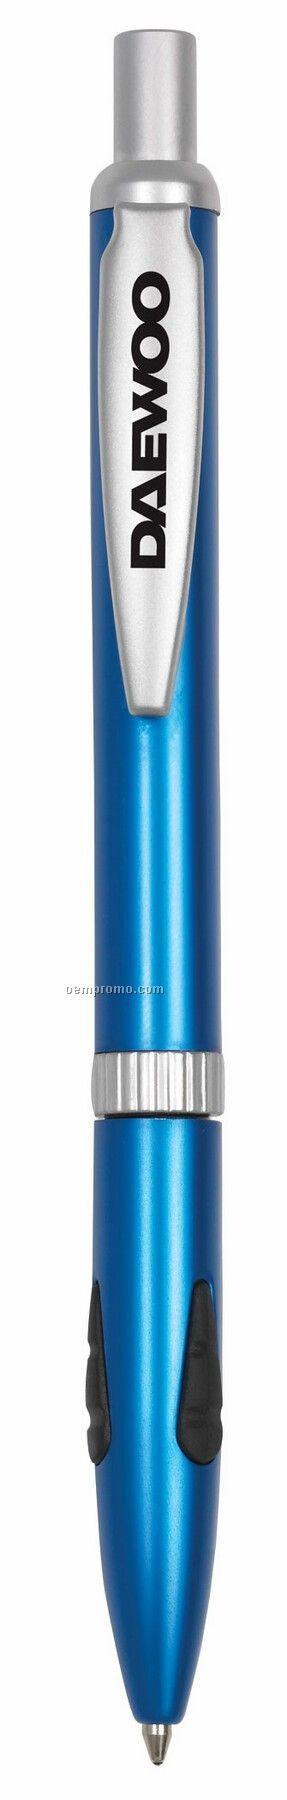 Granada Aluminum Ballpoint Pen W/ Triangle Rubber Grip